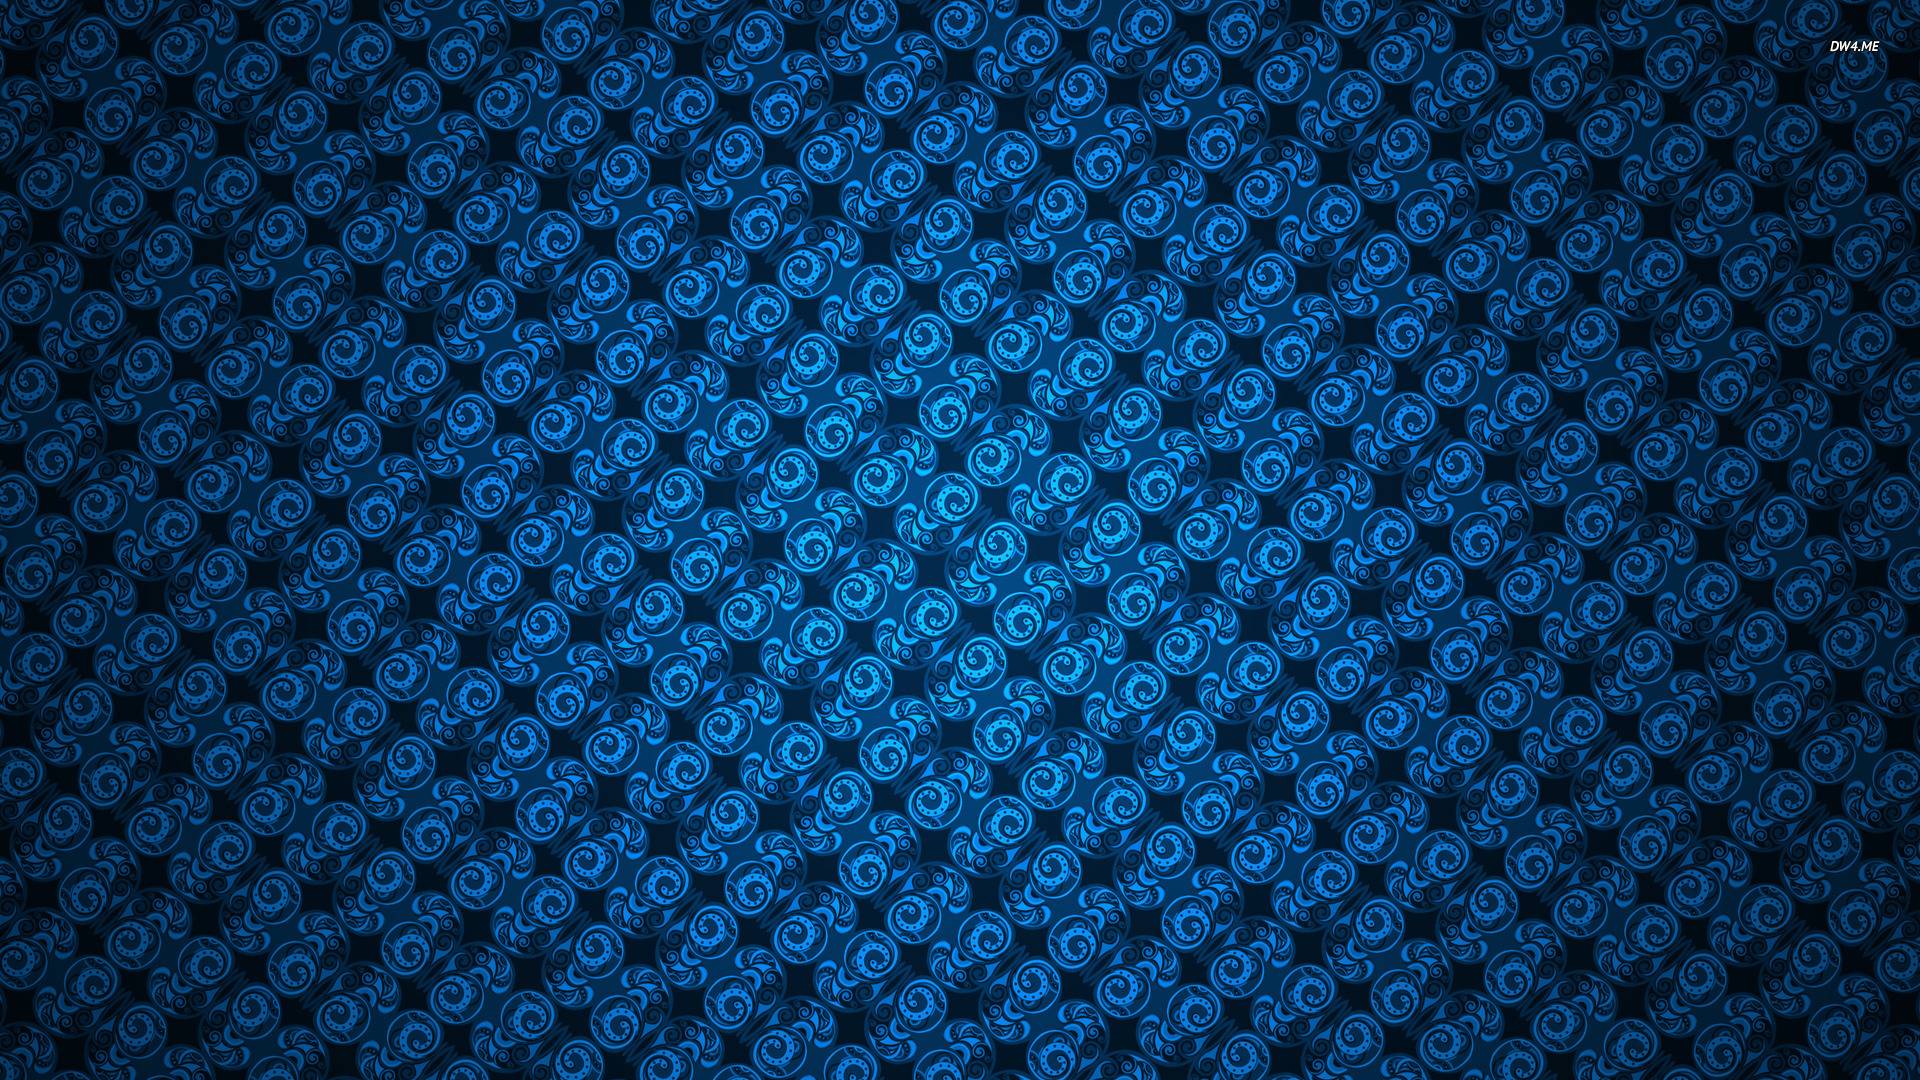 Blue Swirl Pattern Digital Art Wallpaper 1920x1080 px Free